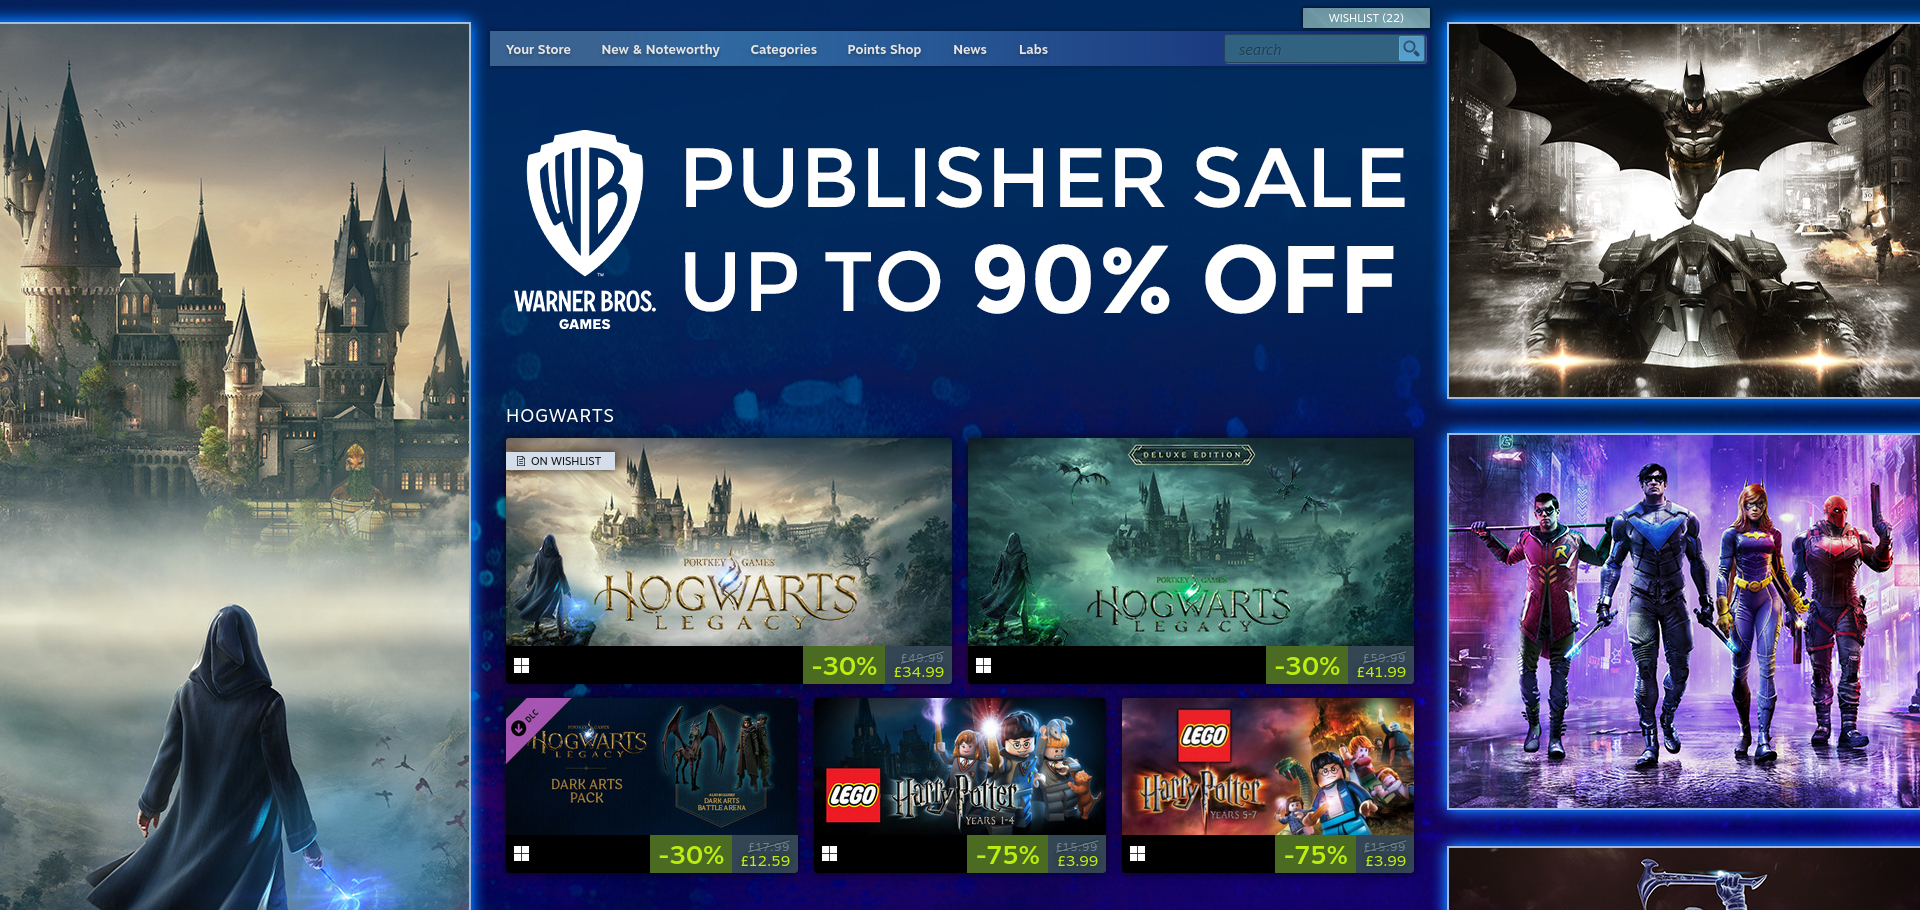 Warner Bros. Games publisher sale page on Steam.